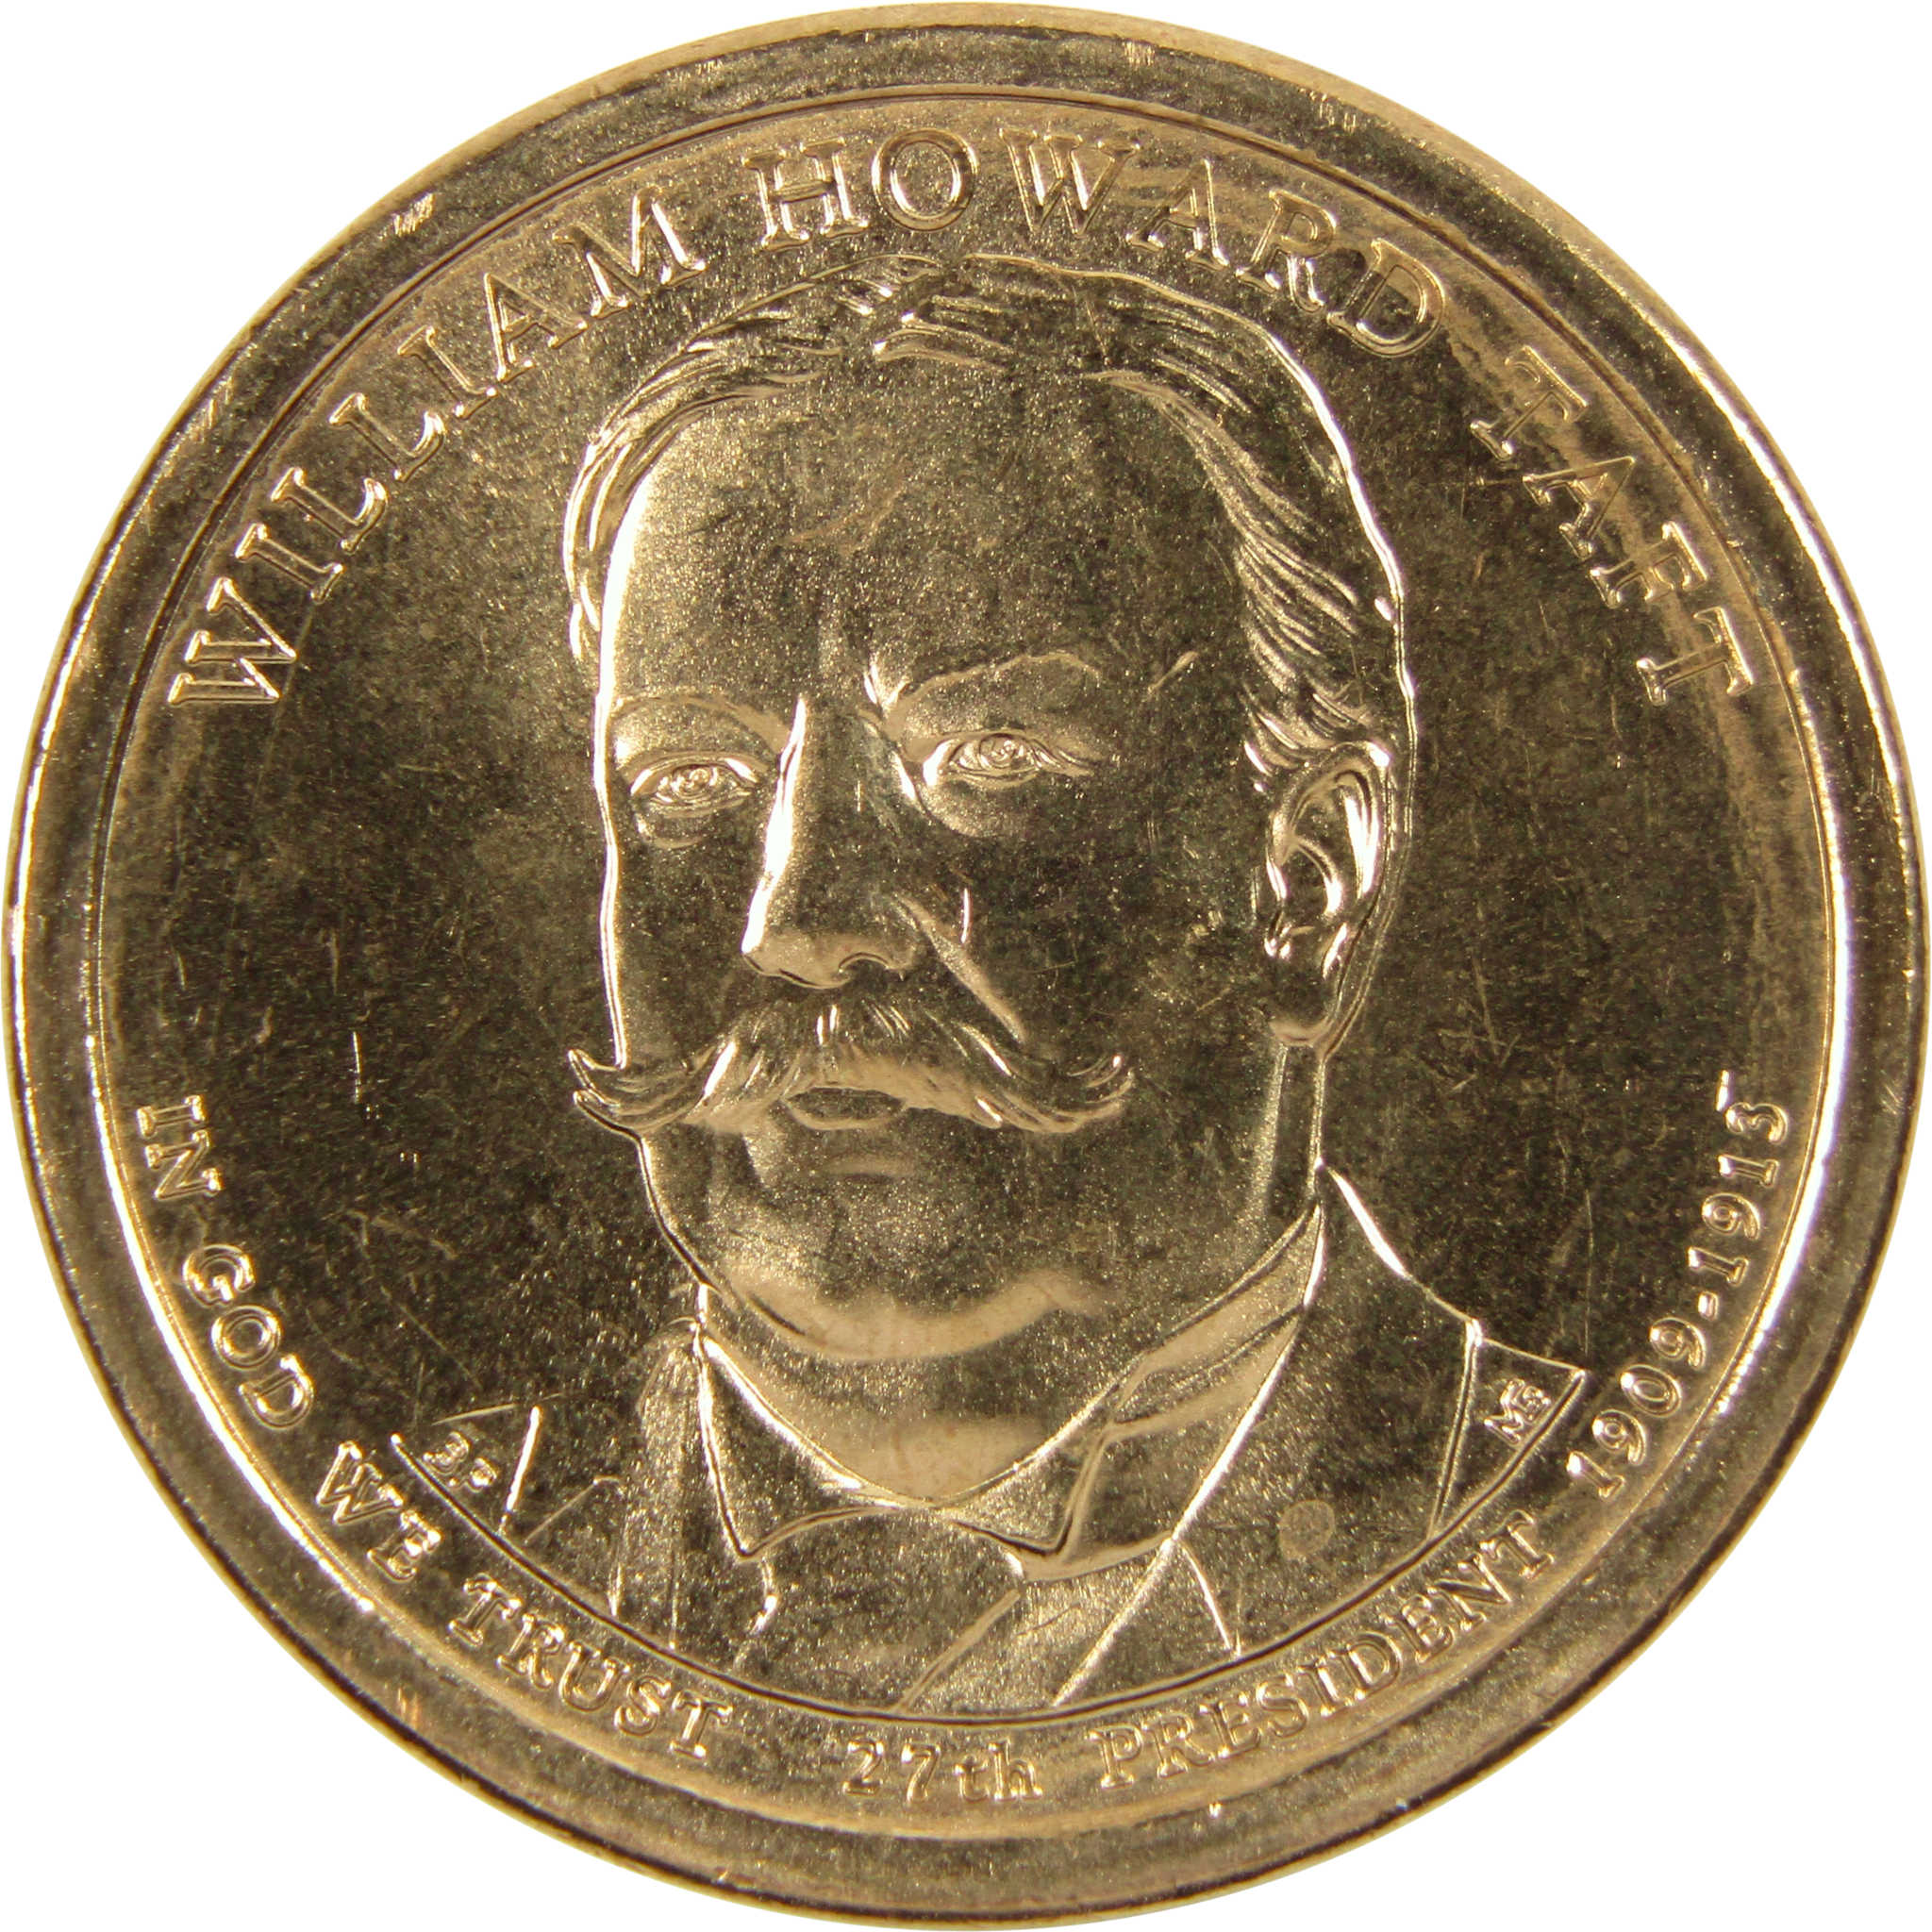 2013 D William H Taft Presidential Dollar BU Uncirculated $1 Coin